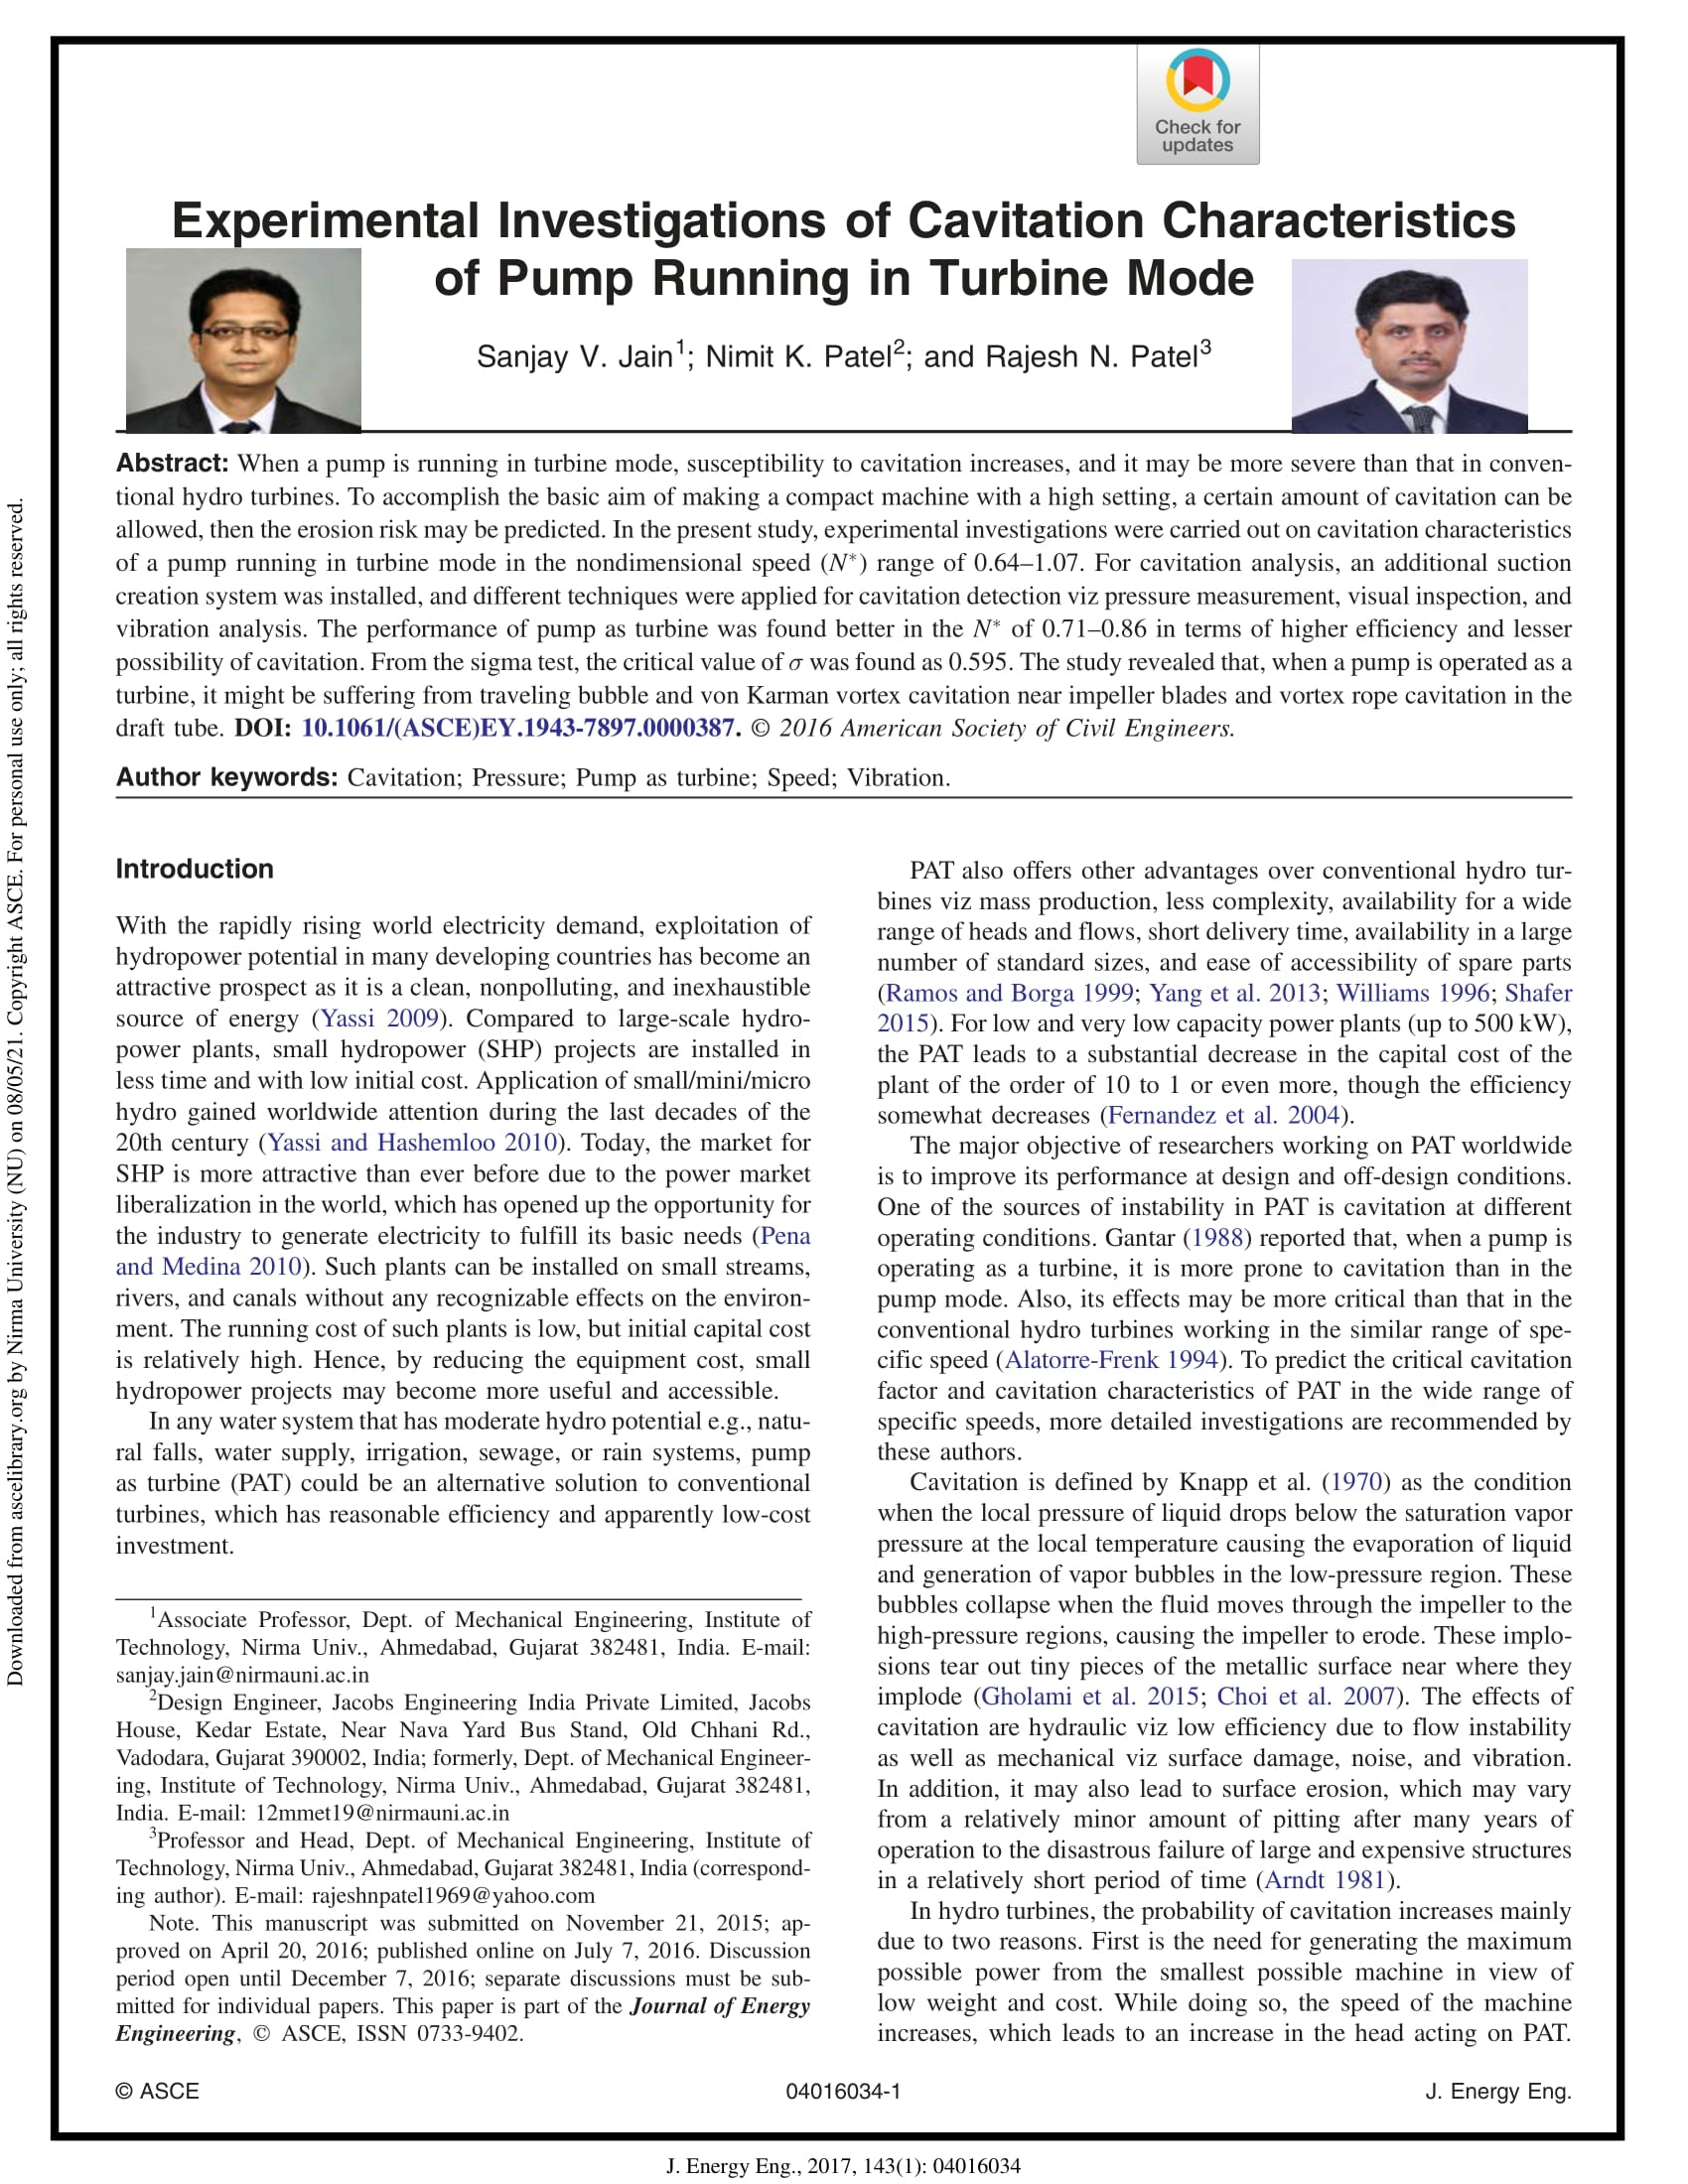 Experimental Investigations of Cavitation Characteristics of Pump Running in Turbine Mode